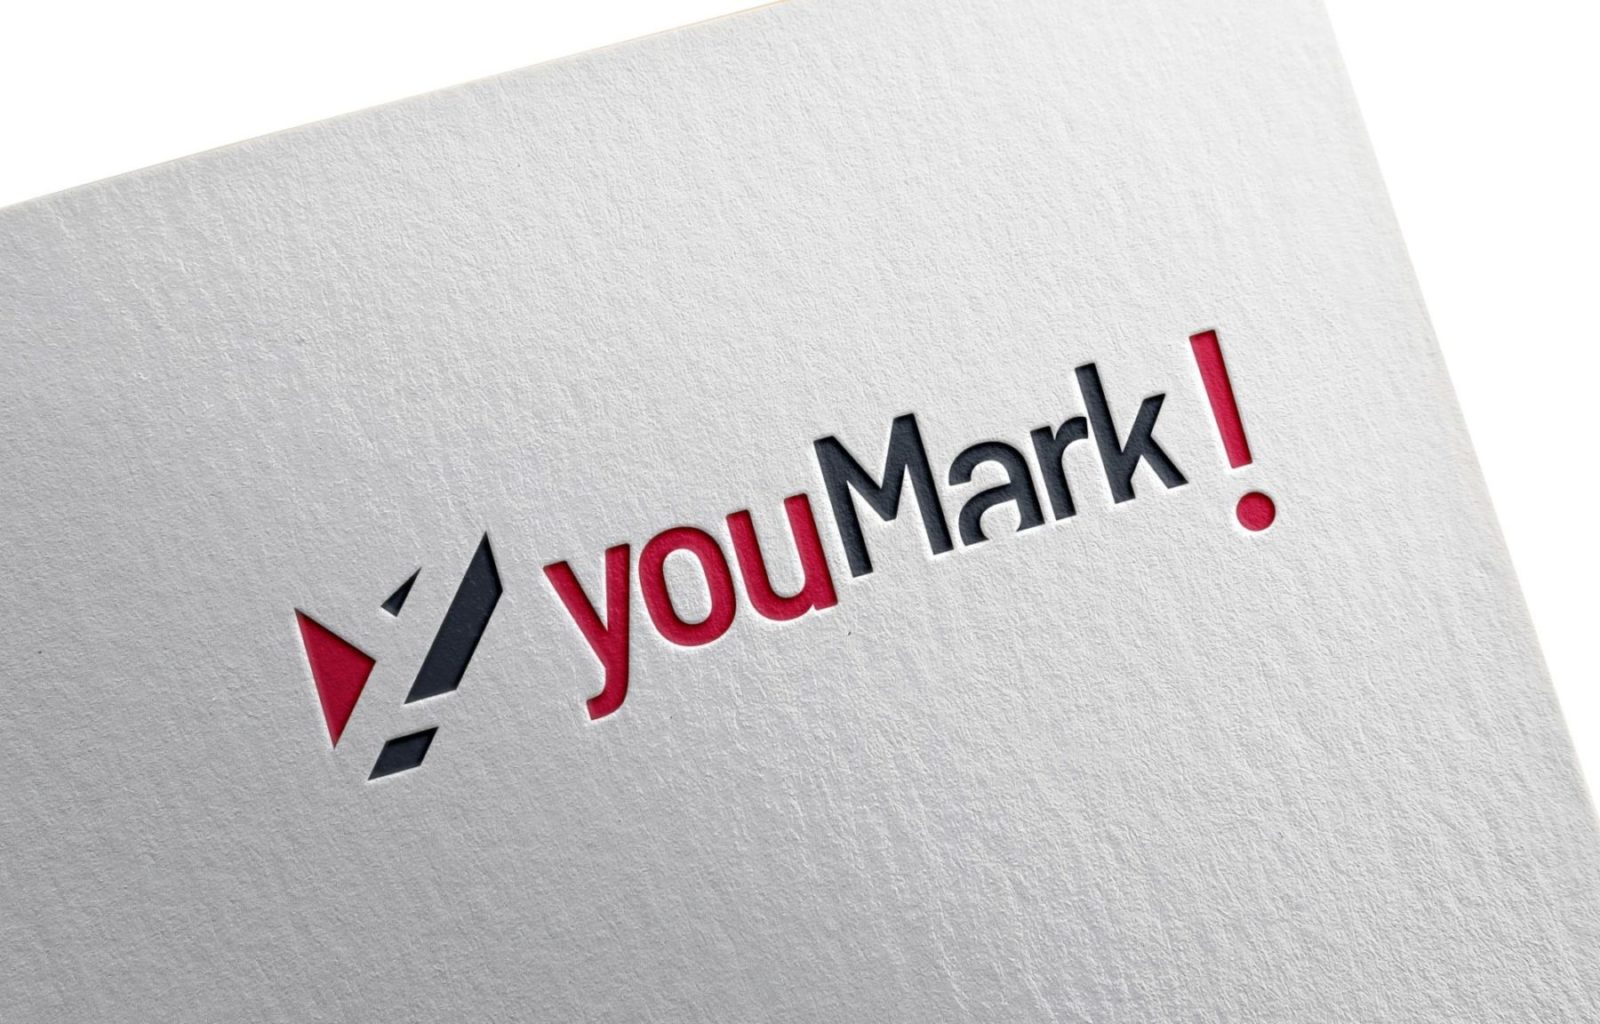 YouMark! rebrand